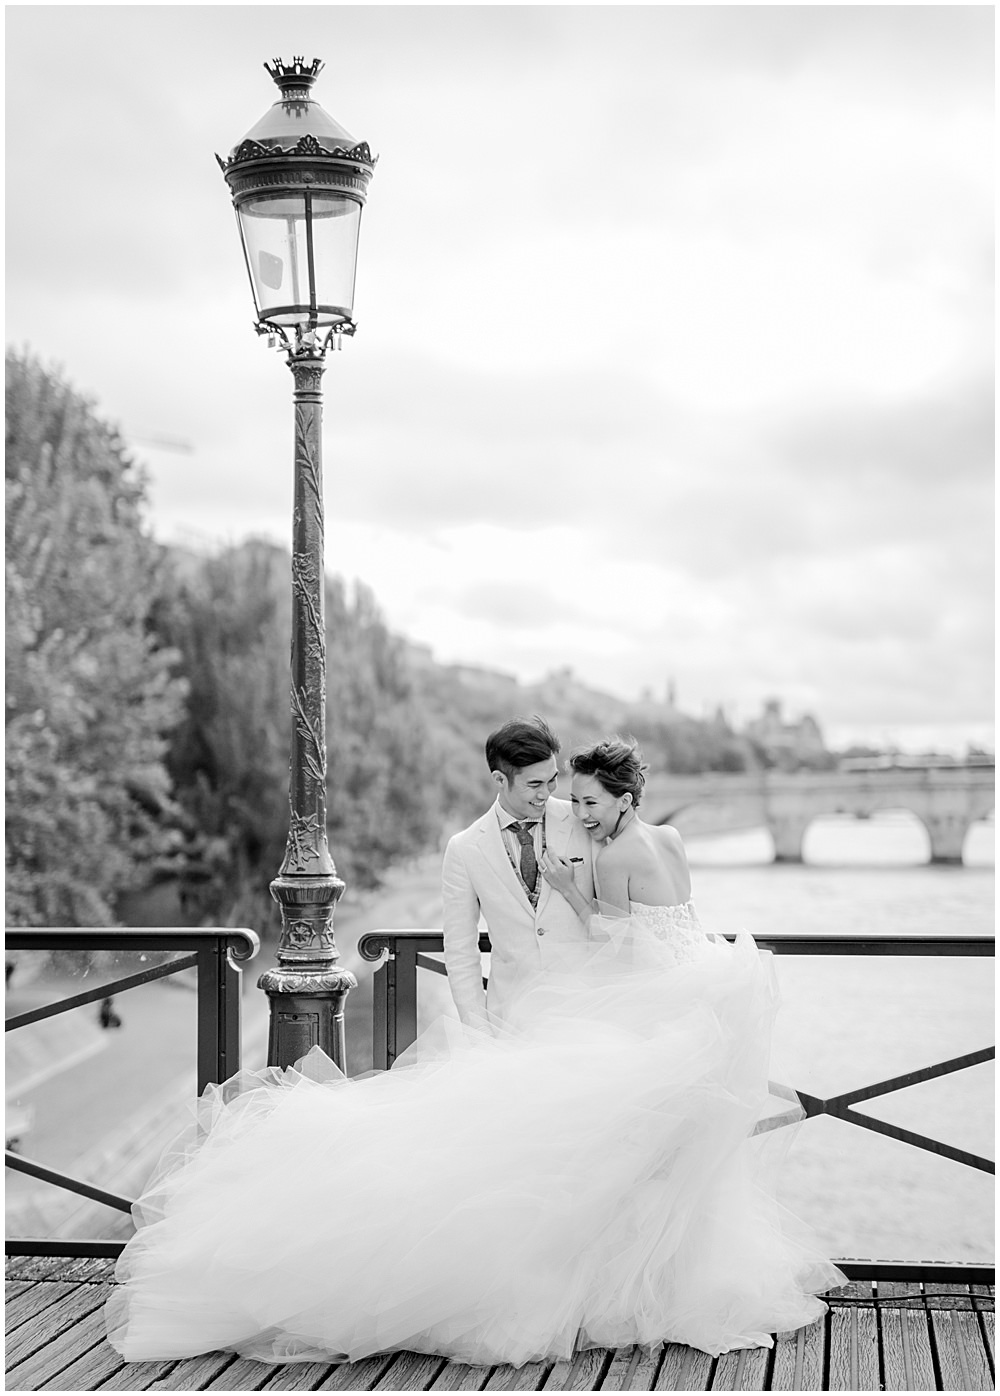 Top 10 Paris Wedding Photography Locations, Pont des Arts, paris wedding photographer, 